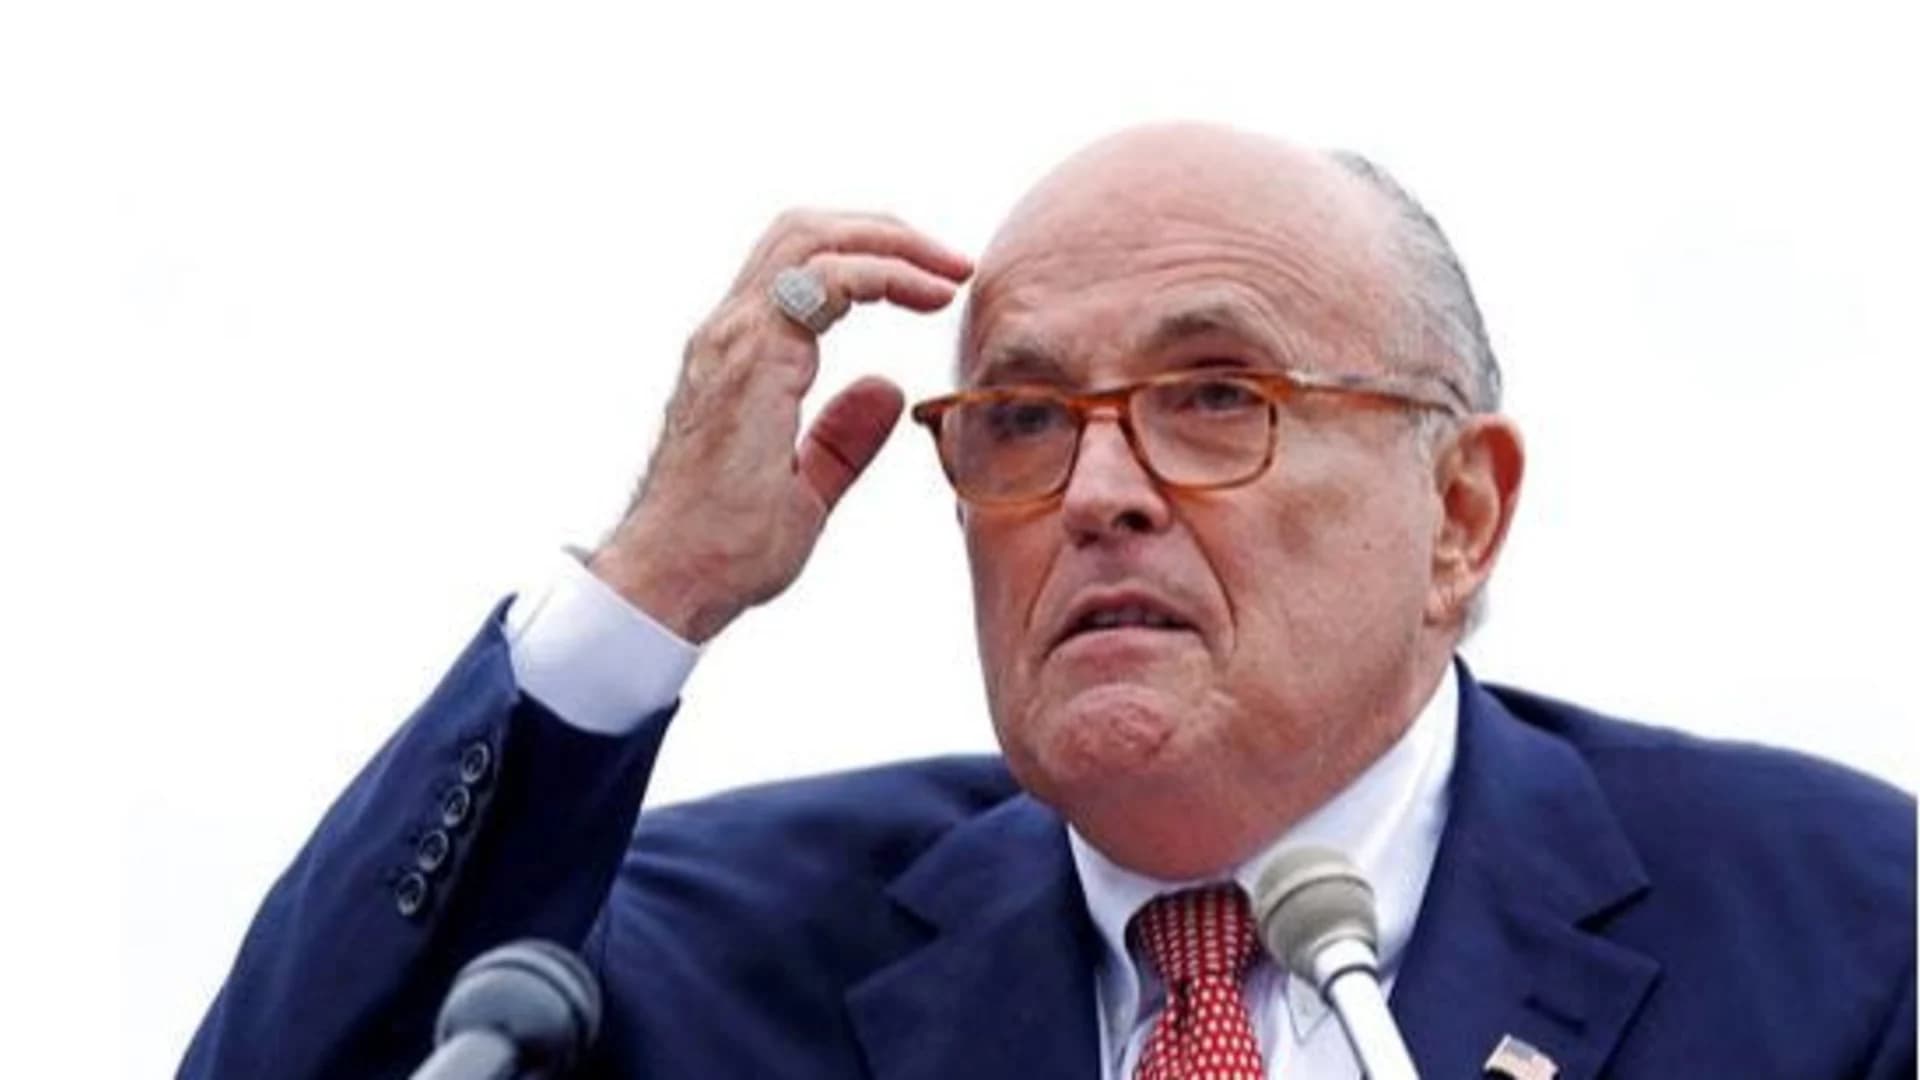 Rudy Giuliani faces subpoena for documents in impeachment probe